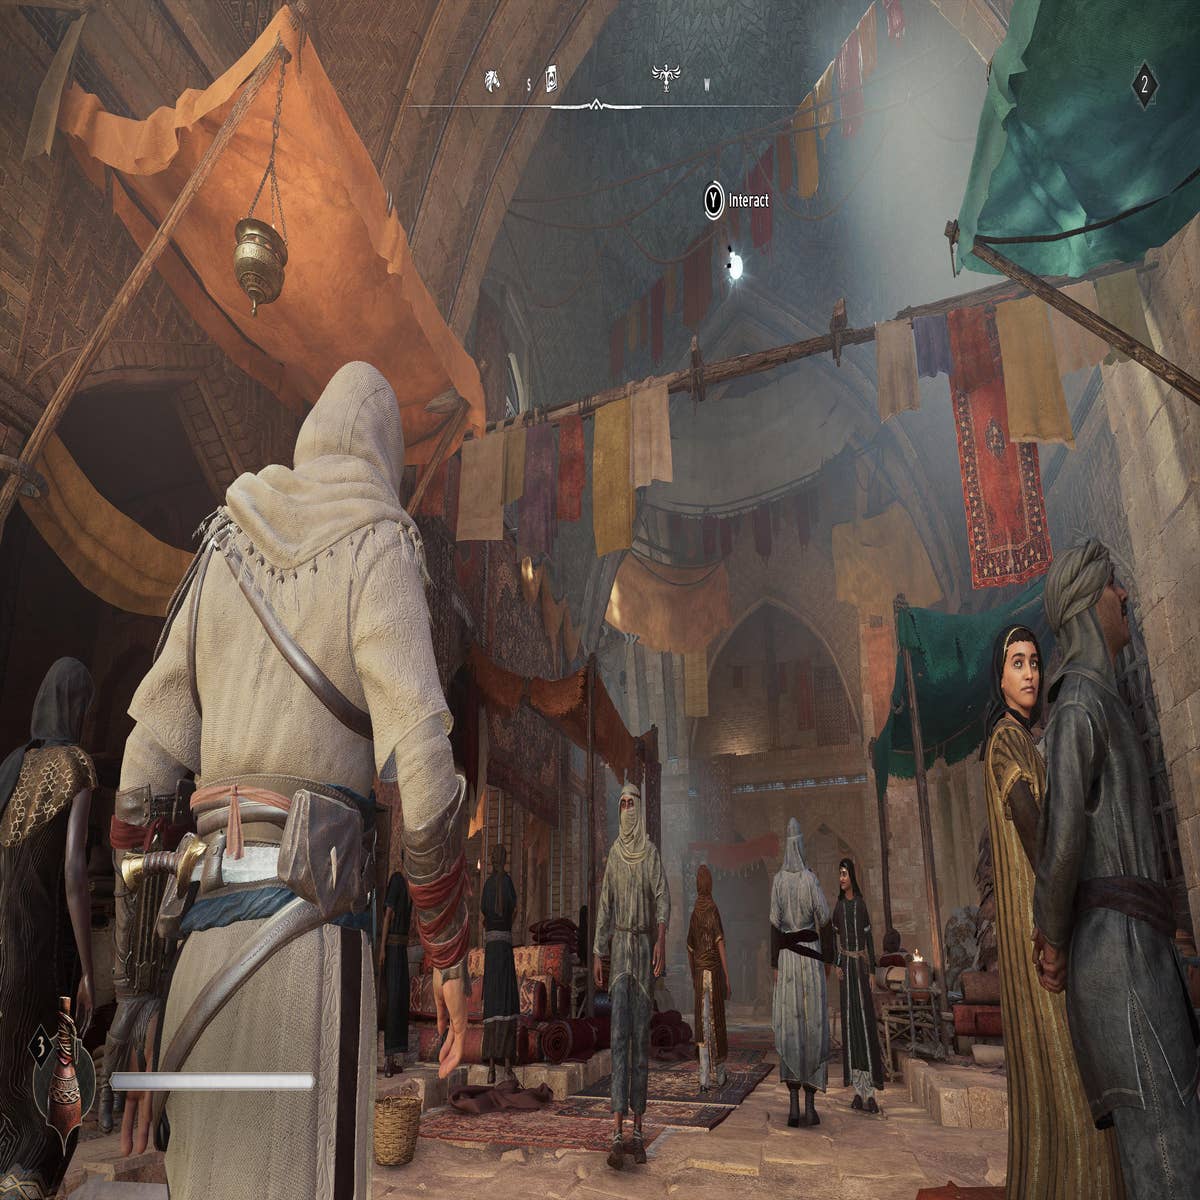 Assassin's Creed Mirage, OT, Basim, the Origin